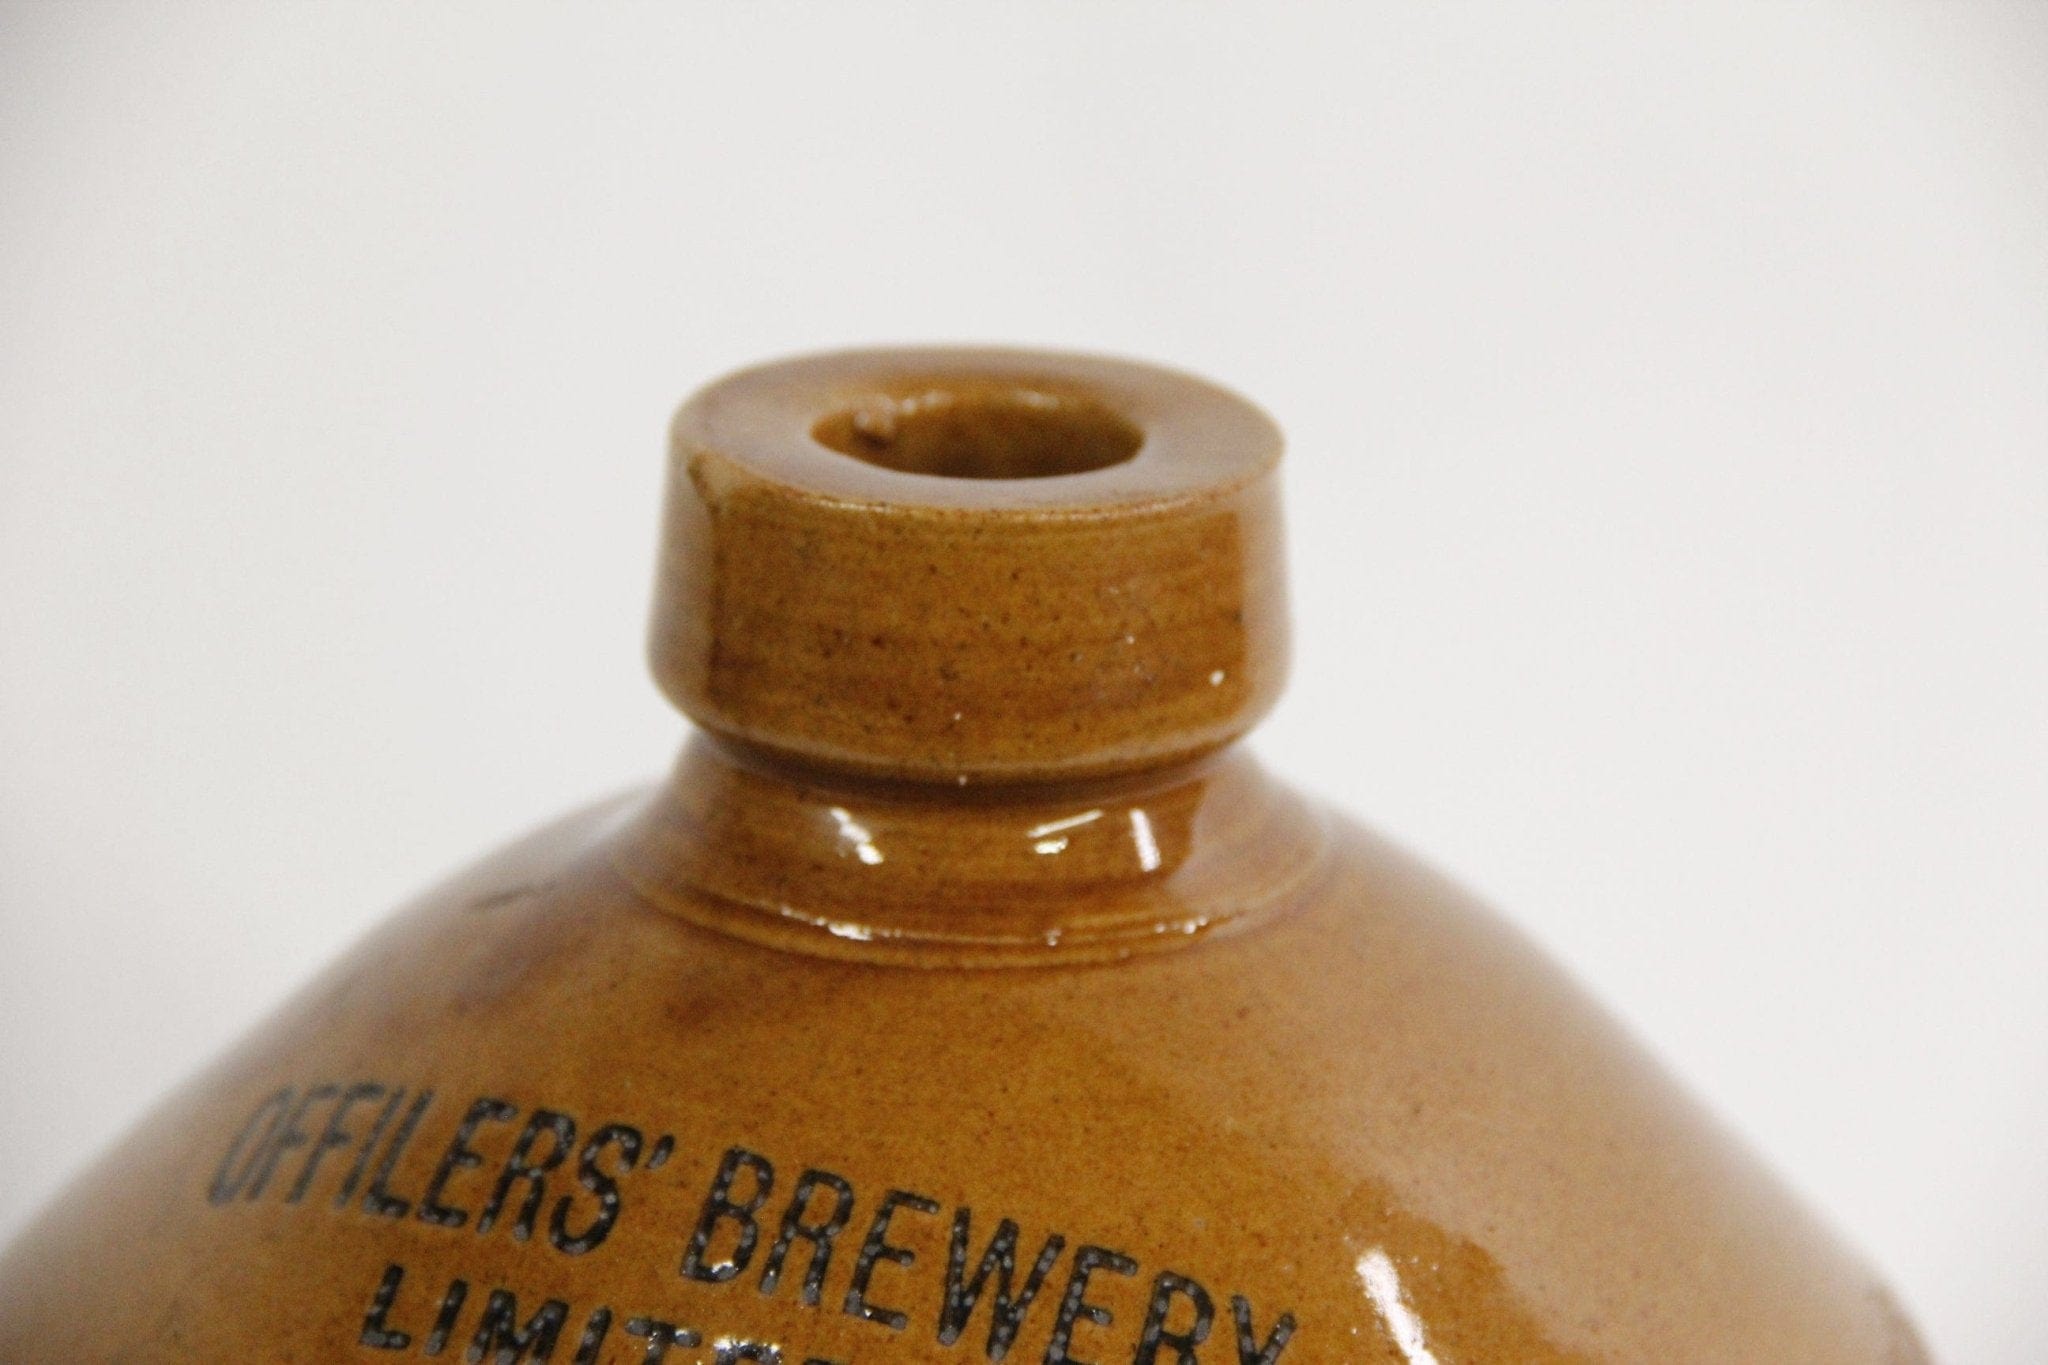 Antique Stoneware Beer Jug | English Brewery Advertisement - Debra Hall Lifestyle